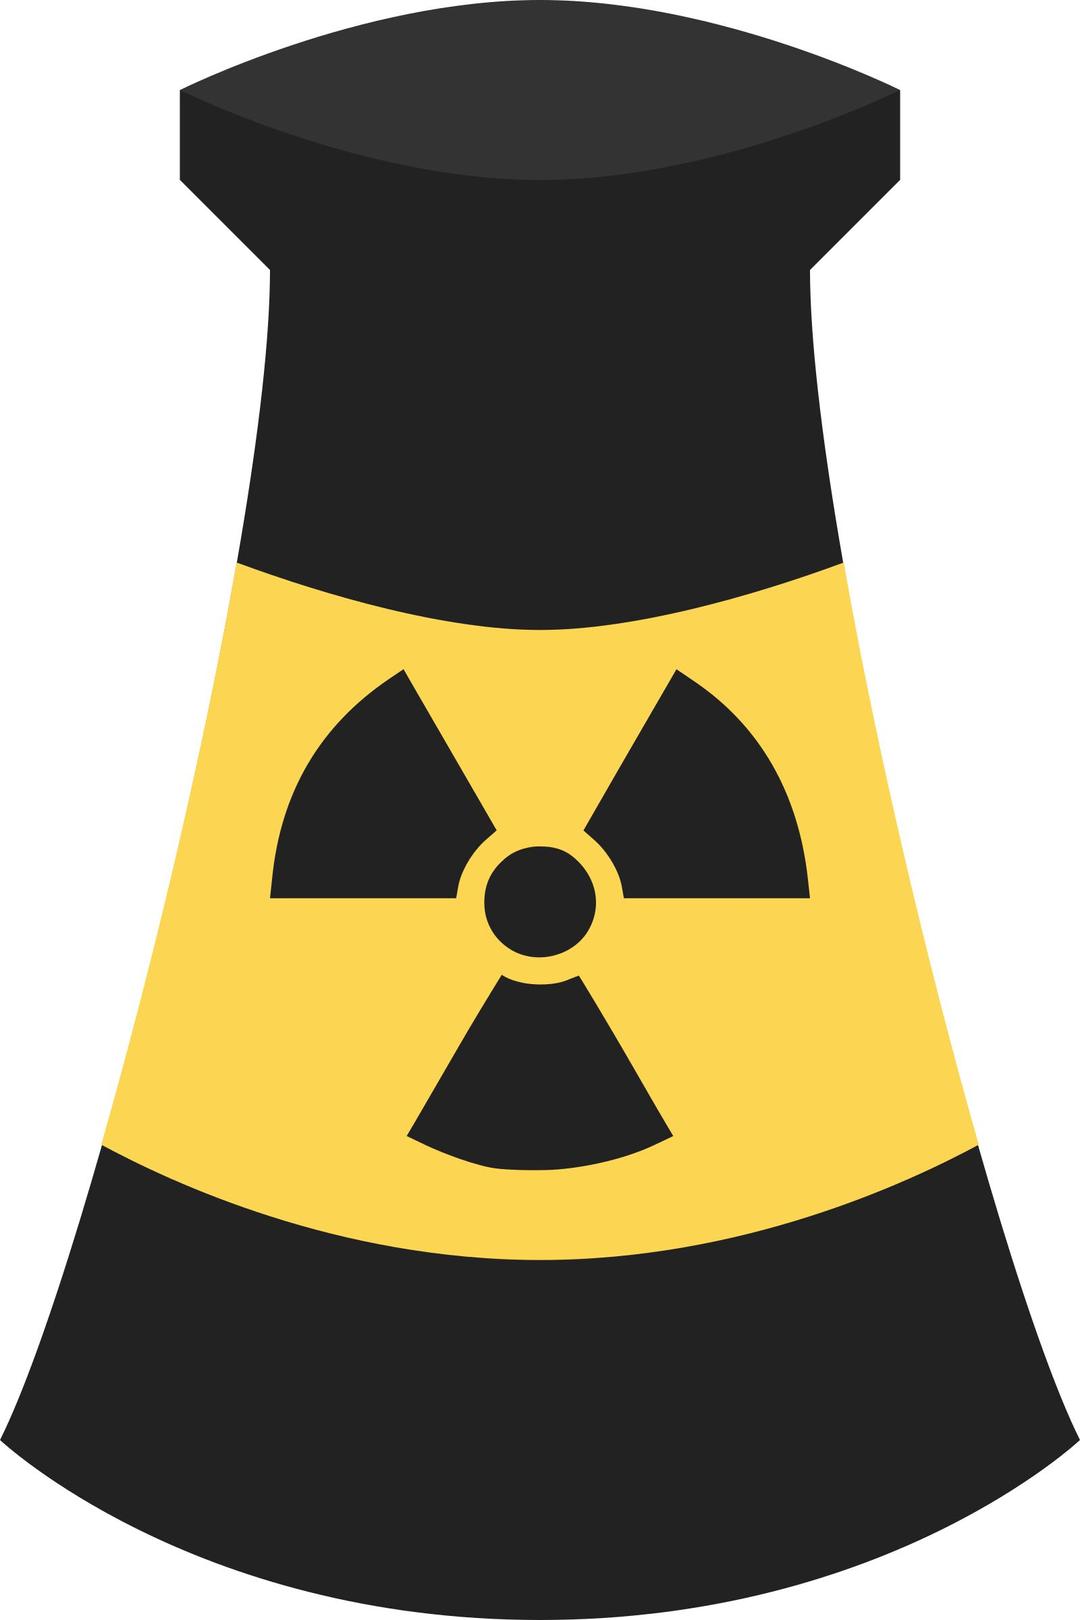 Atomic Energy Plant Symbol 4 png transparent